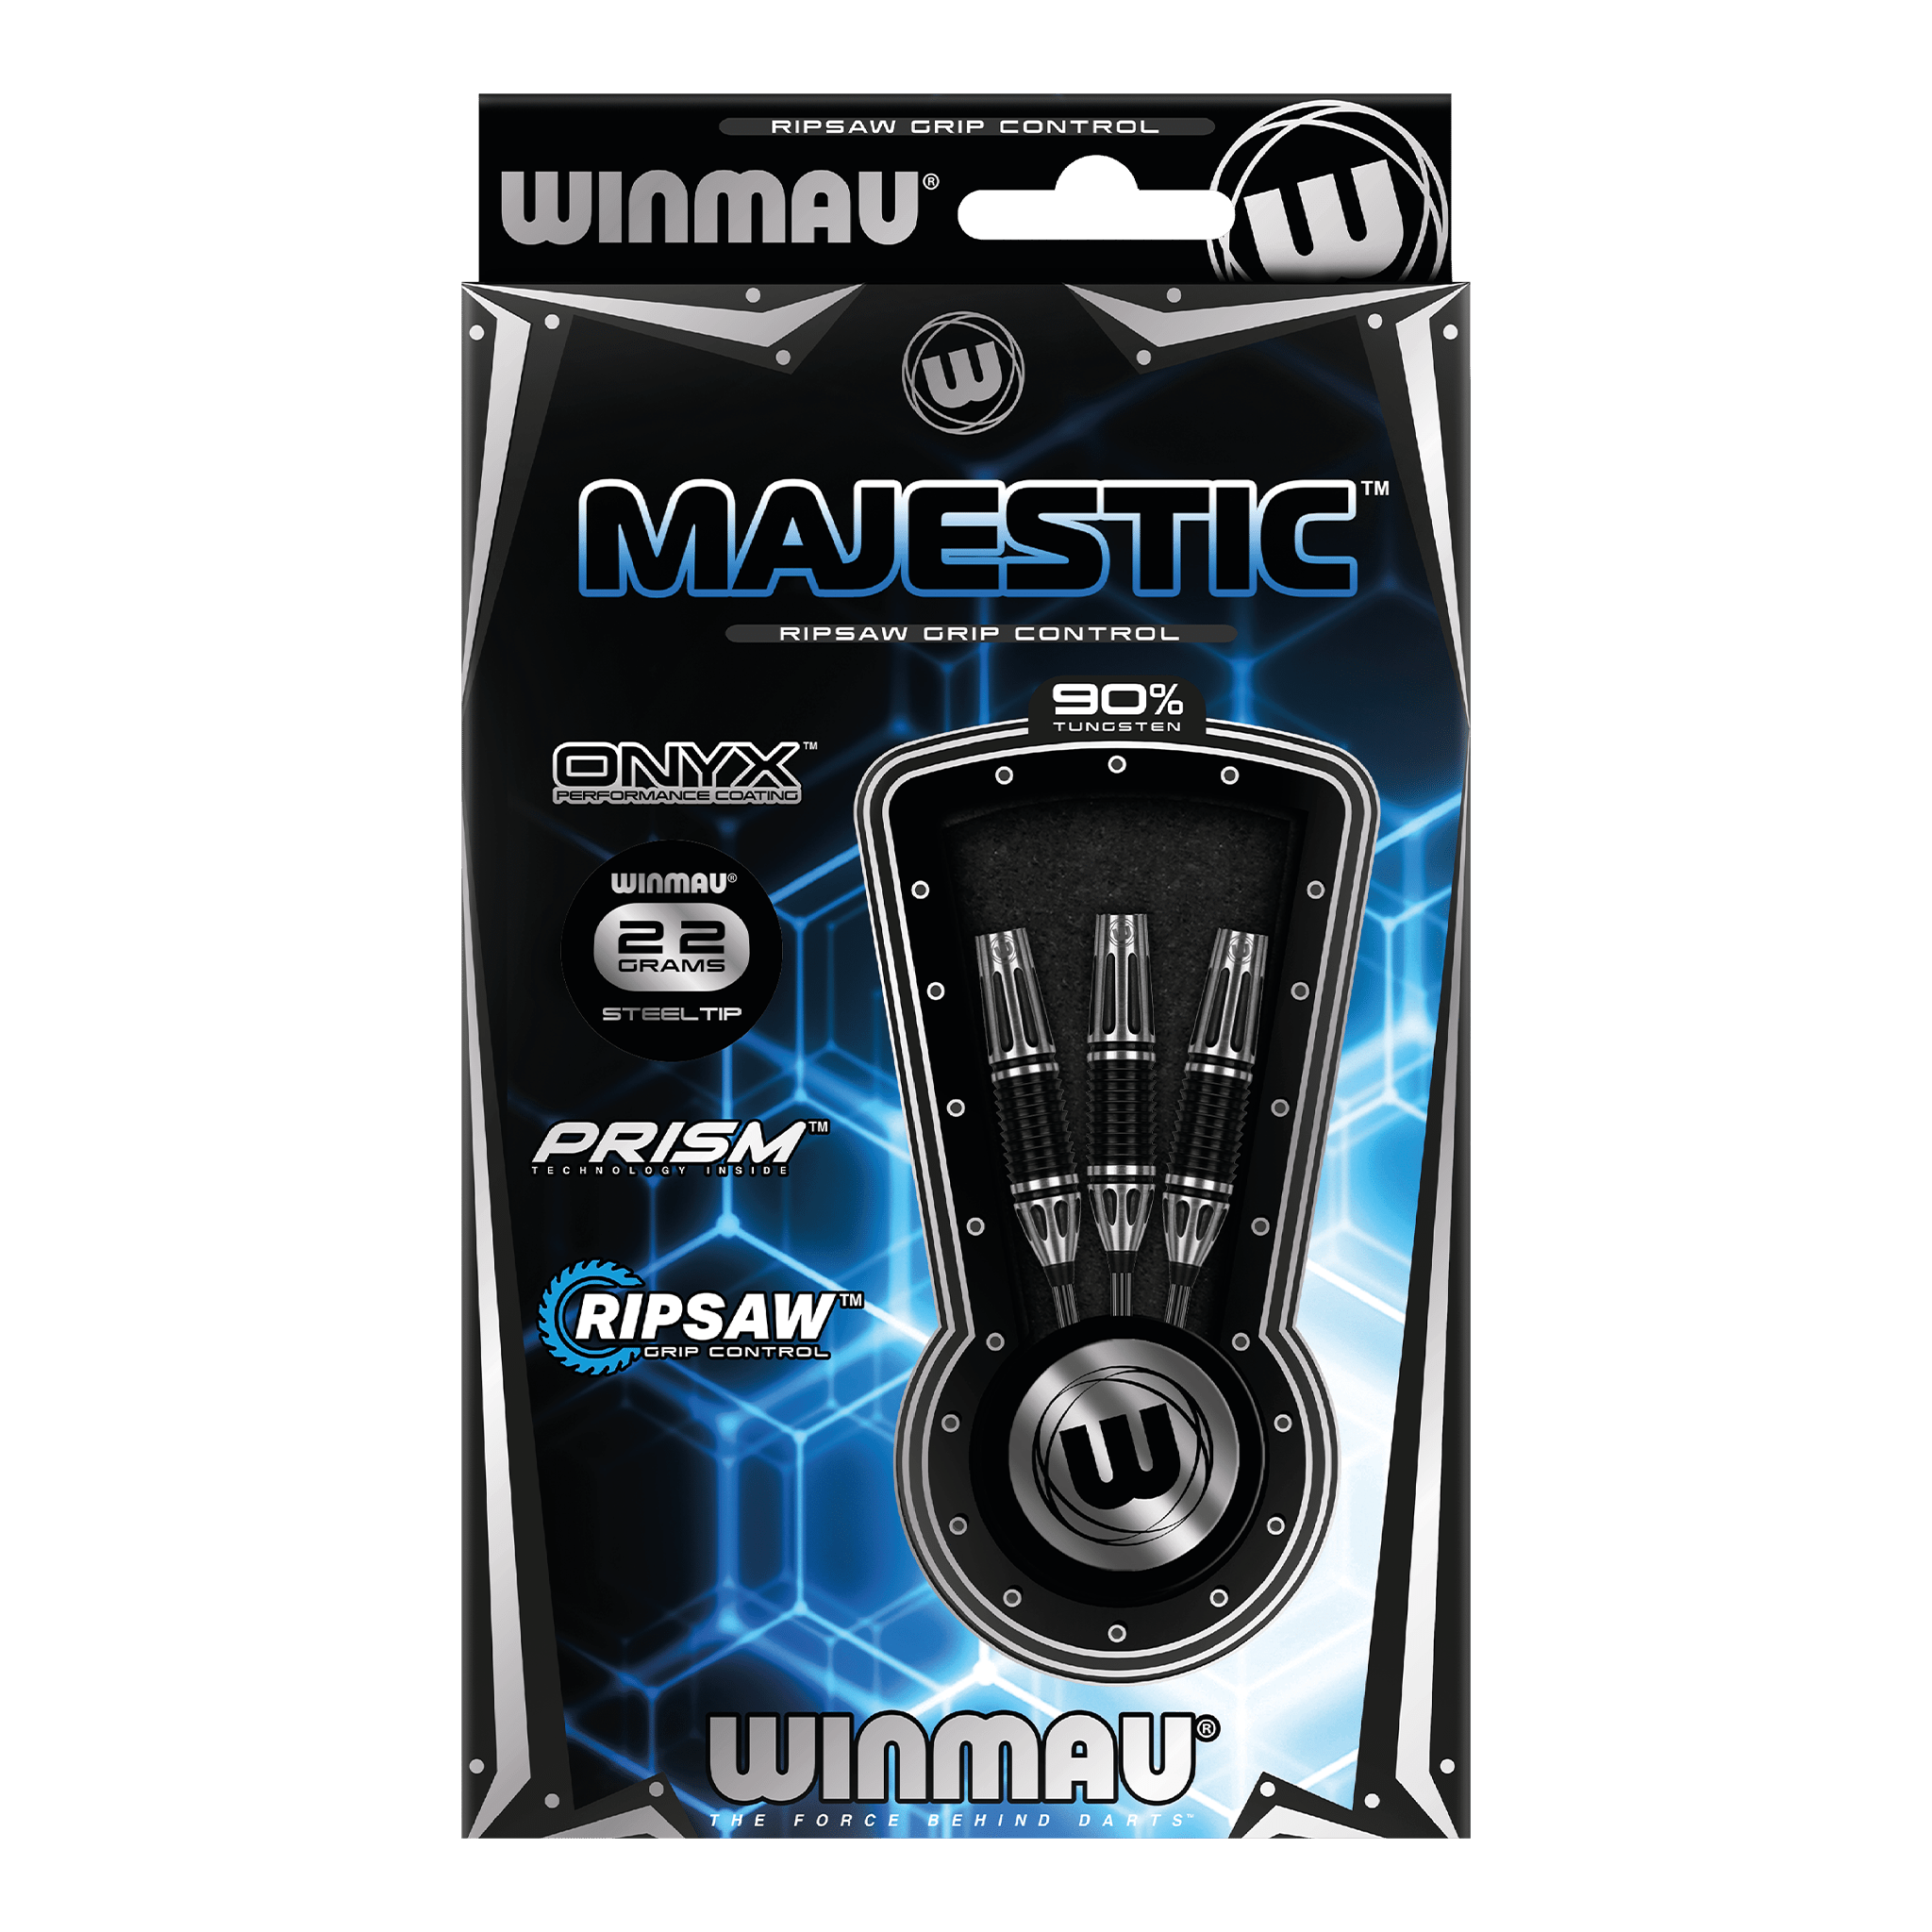 Winmau Majestic Steel Tip Darts - 90% Tungsten - 22 Grams Darts